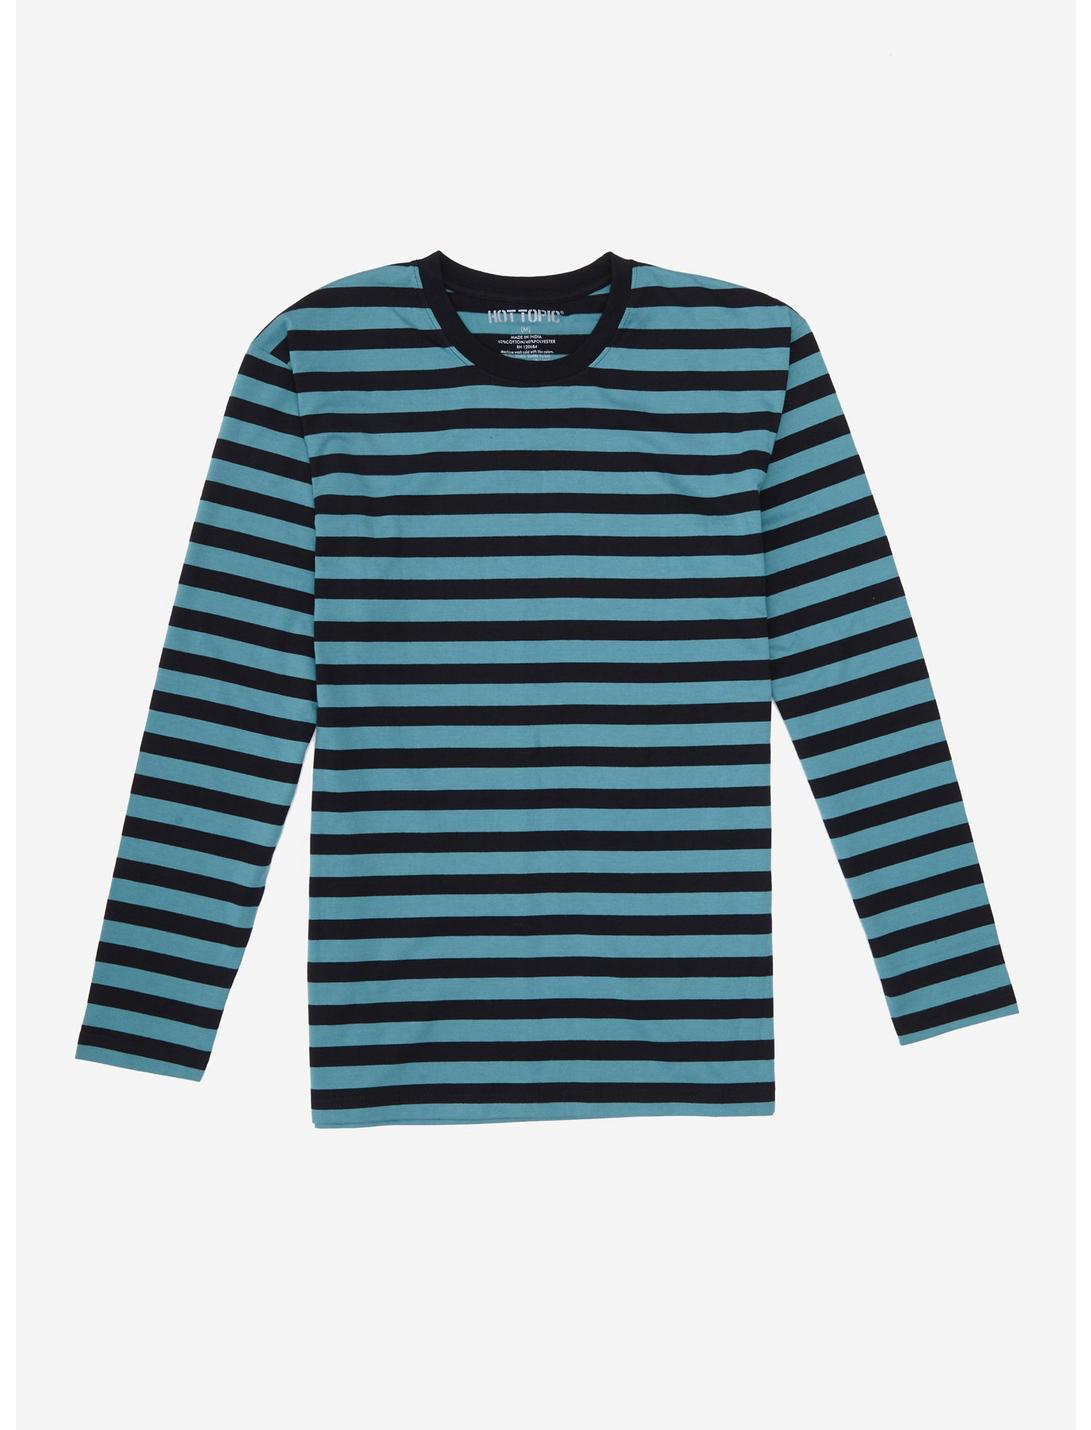 Teal & Black Stripe Long-Sleeve T-Shirt, STRIPE - TEAL, hi-res